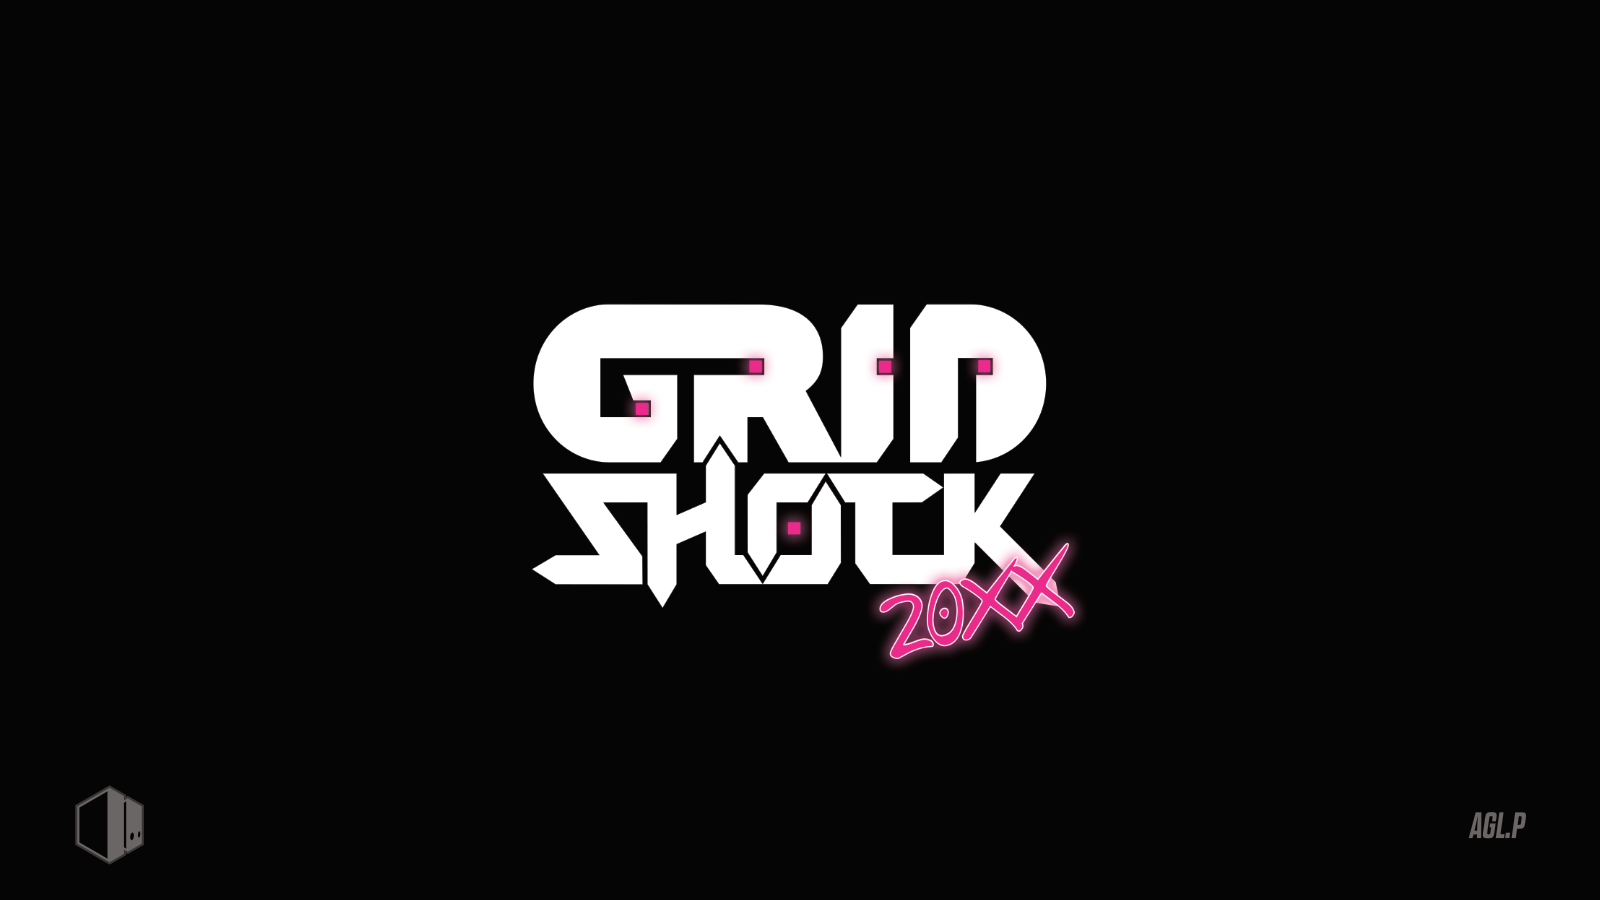 Grid Shock 20XX | VX2 | Chris Vermeren